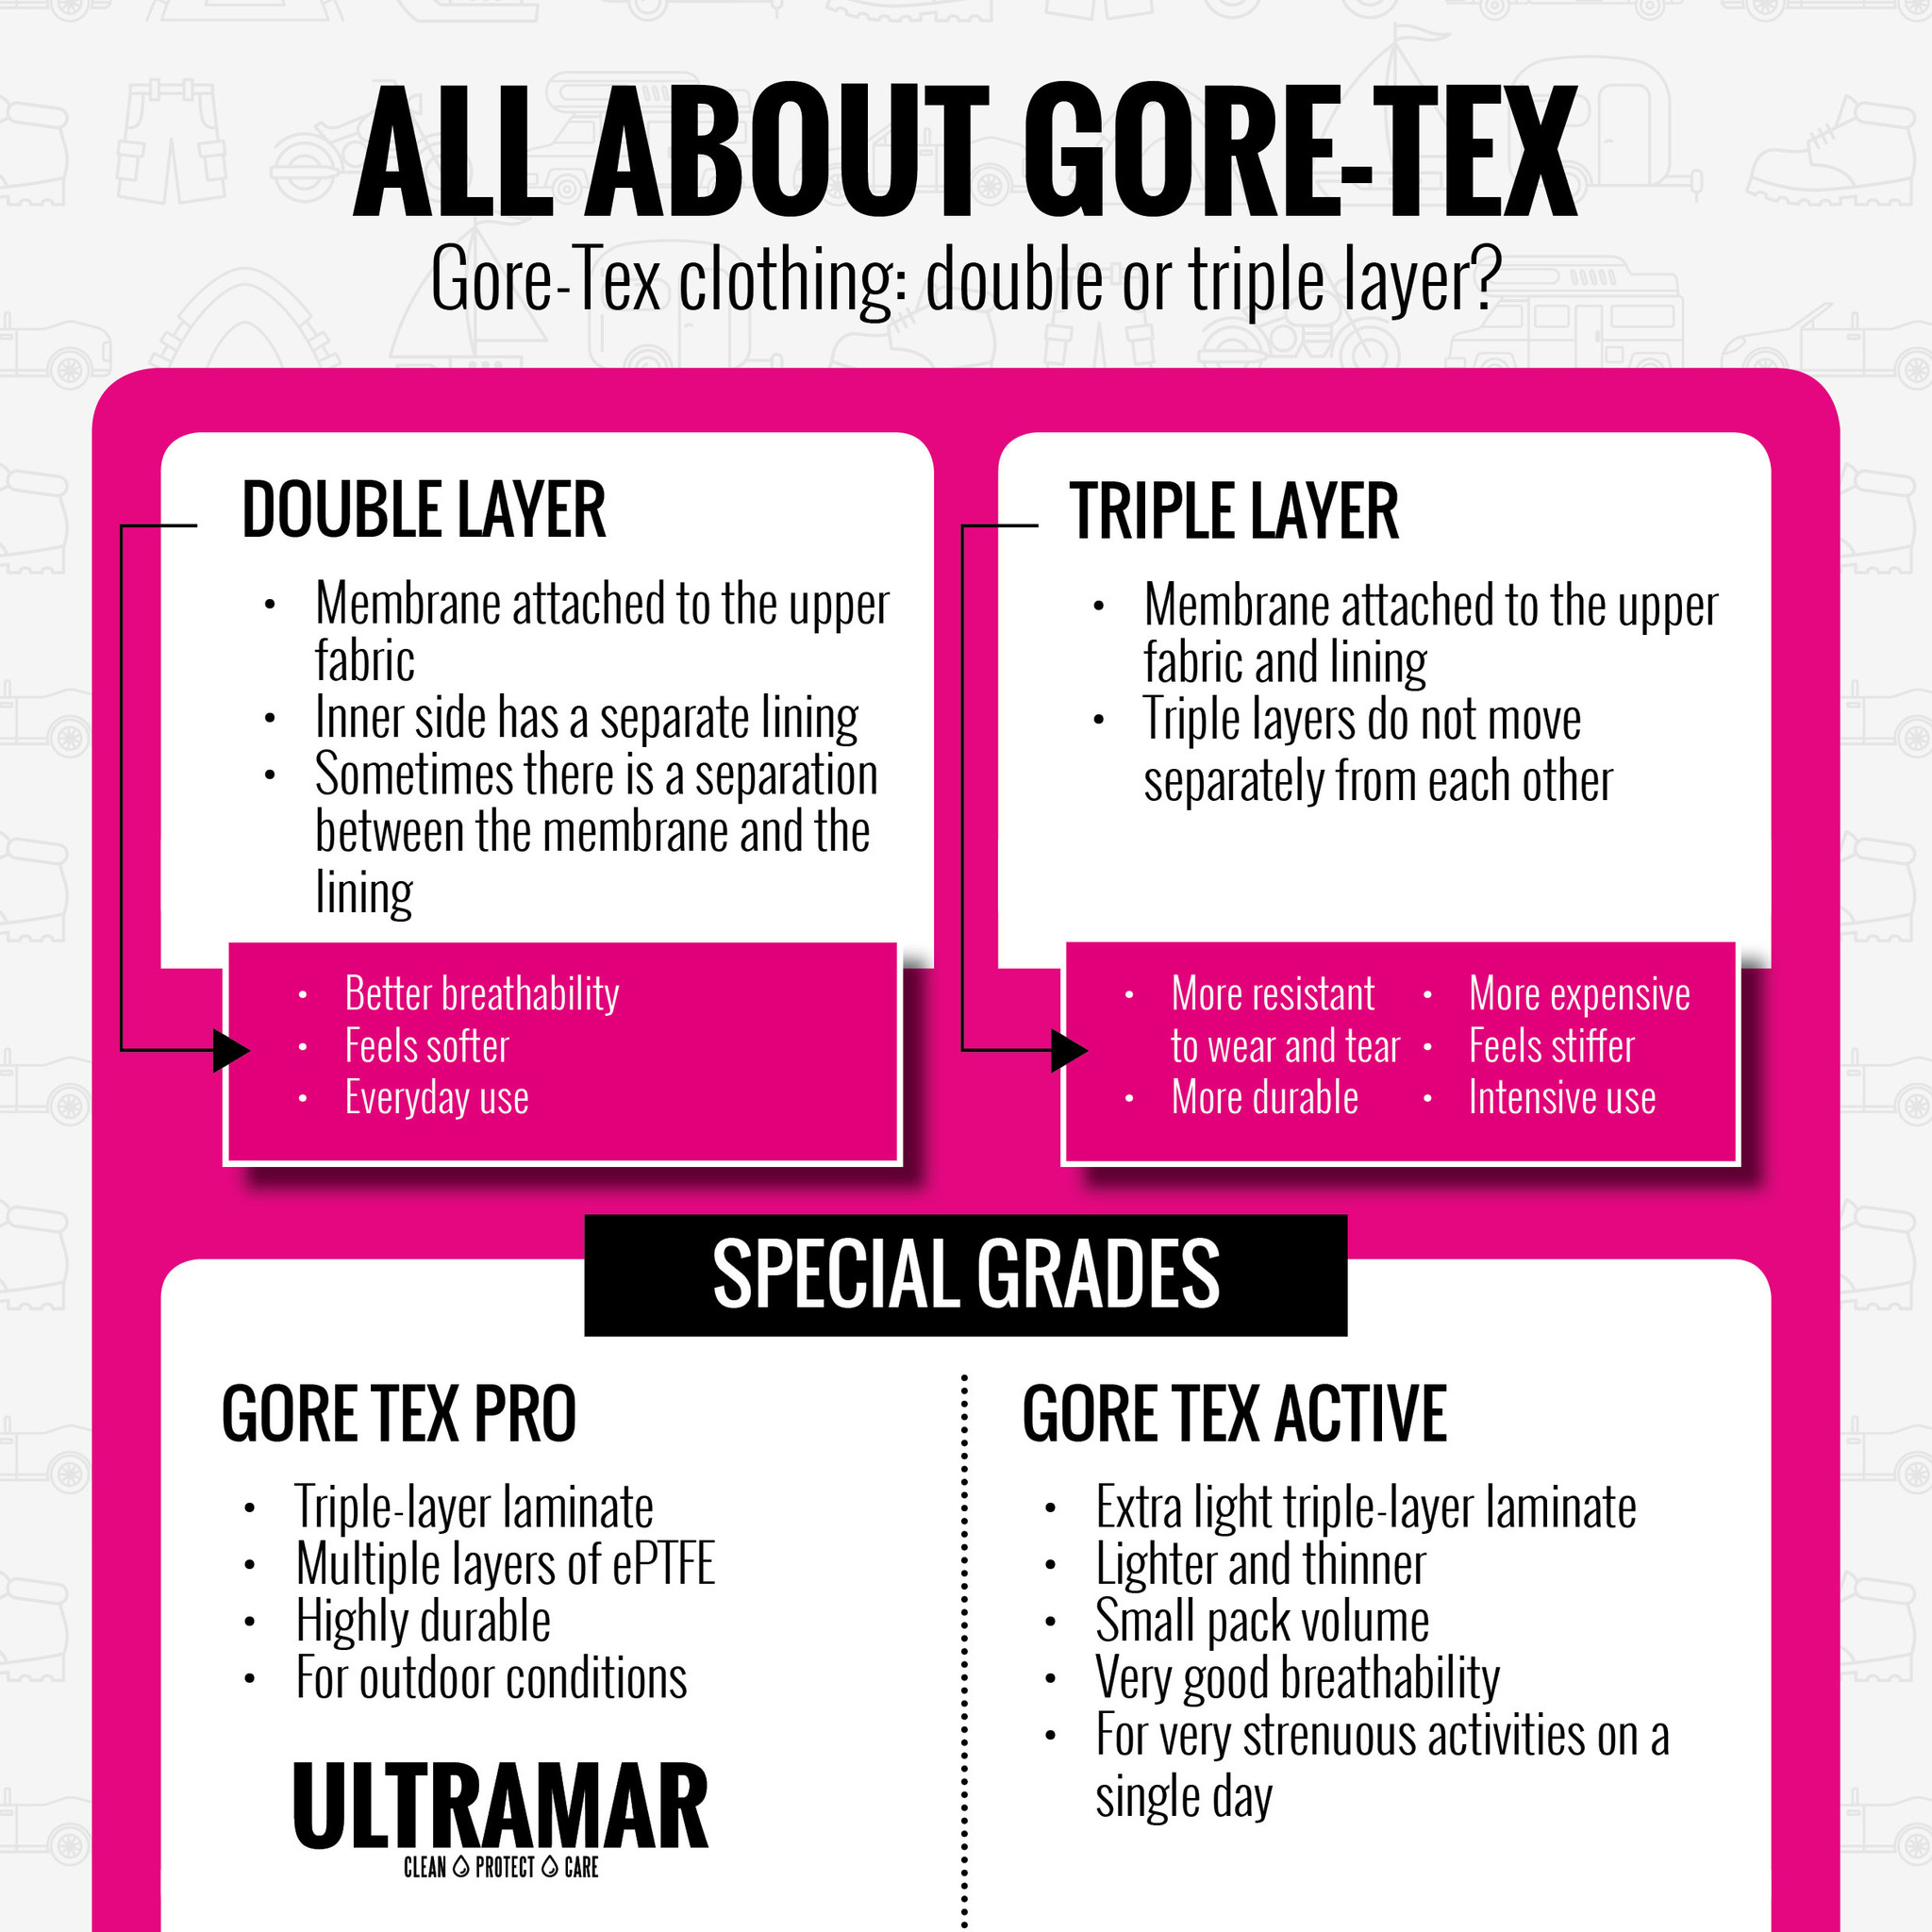 Gore-Tex clothing